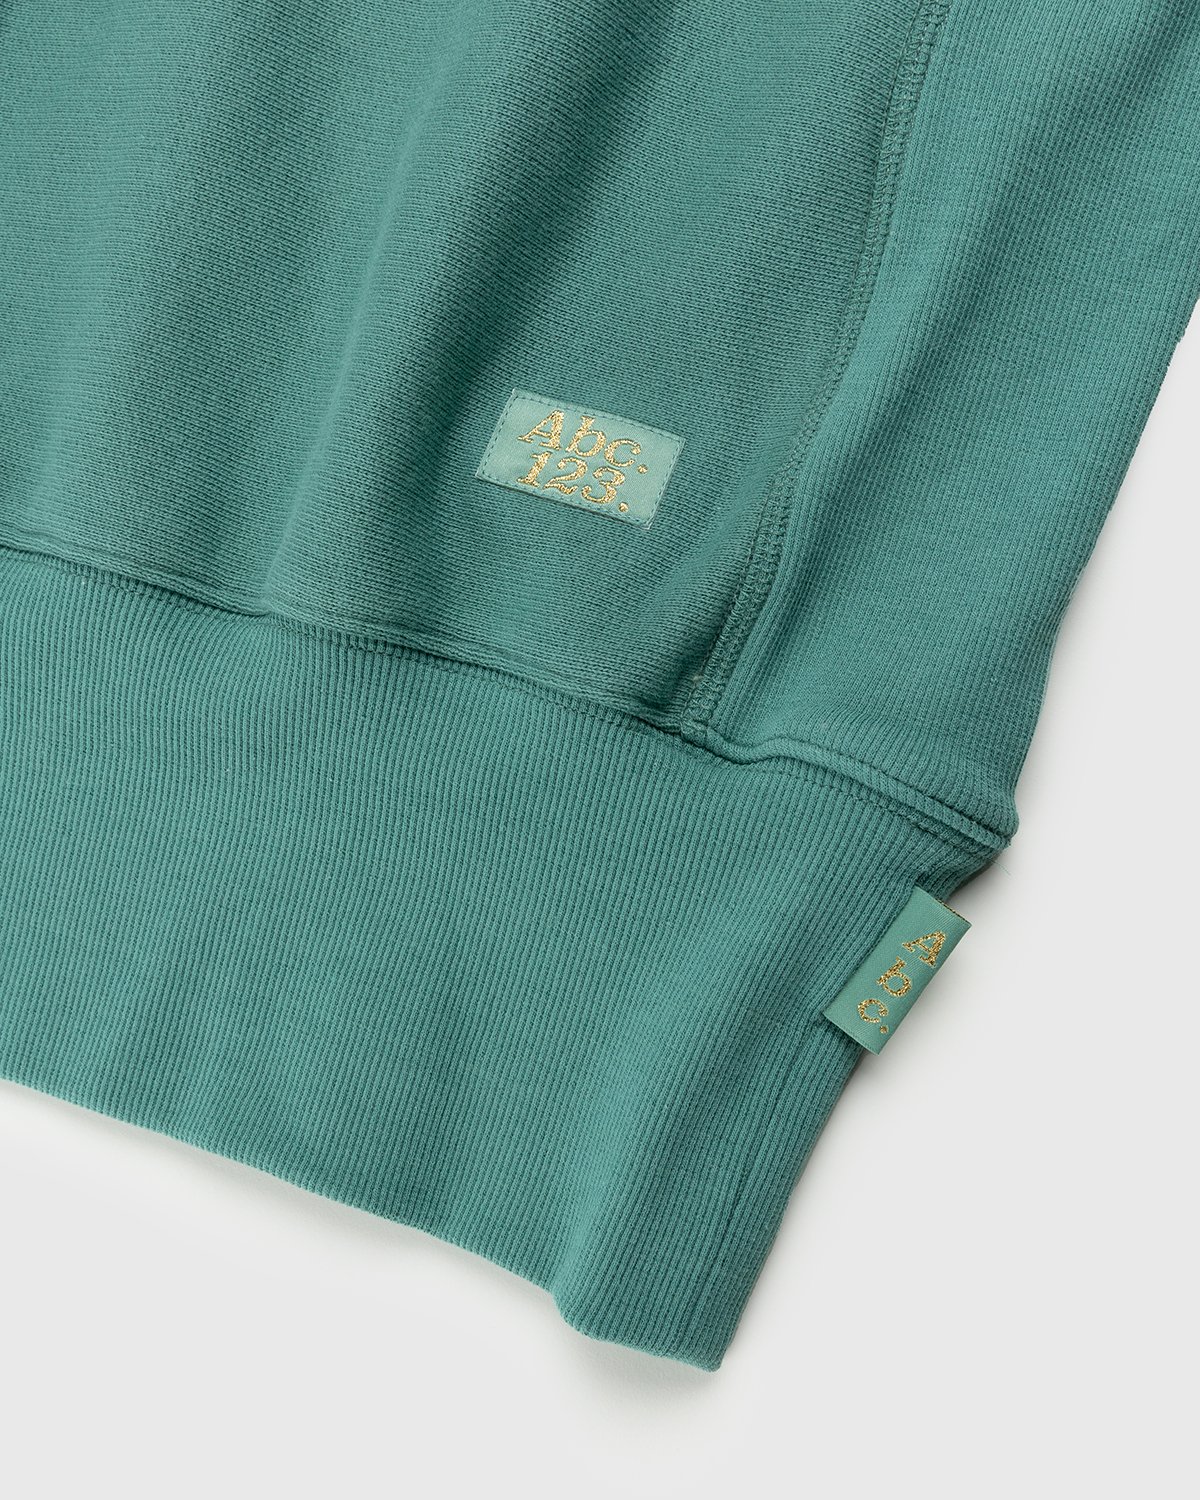 Abc. - French Terry Crewneck Sweatshirt Apatite - Clothing - Green - Image 5